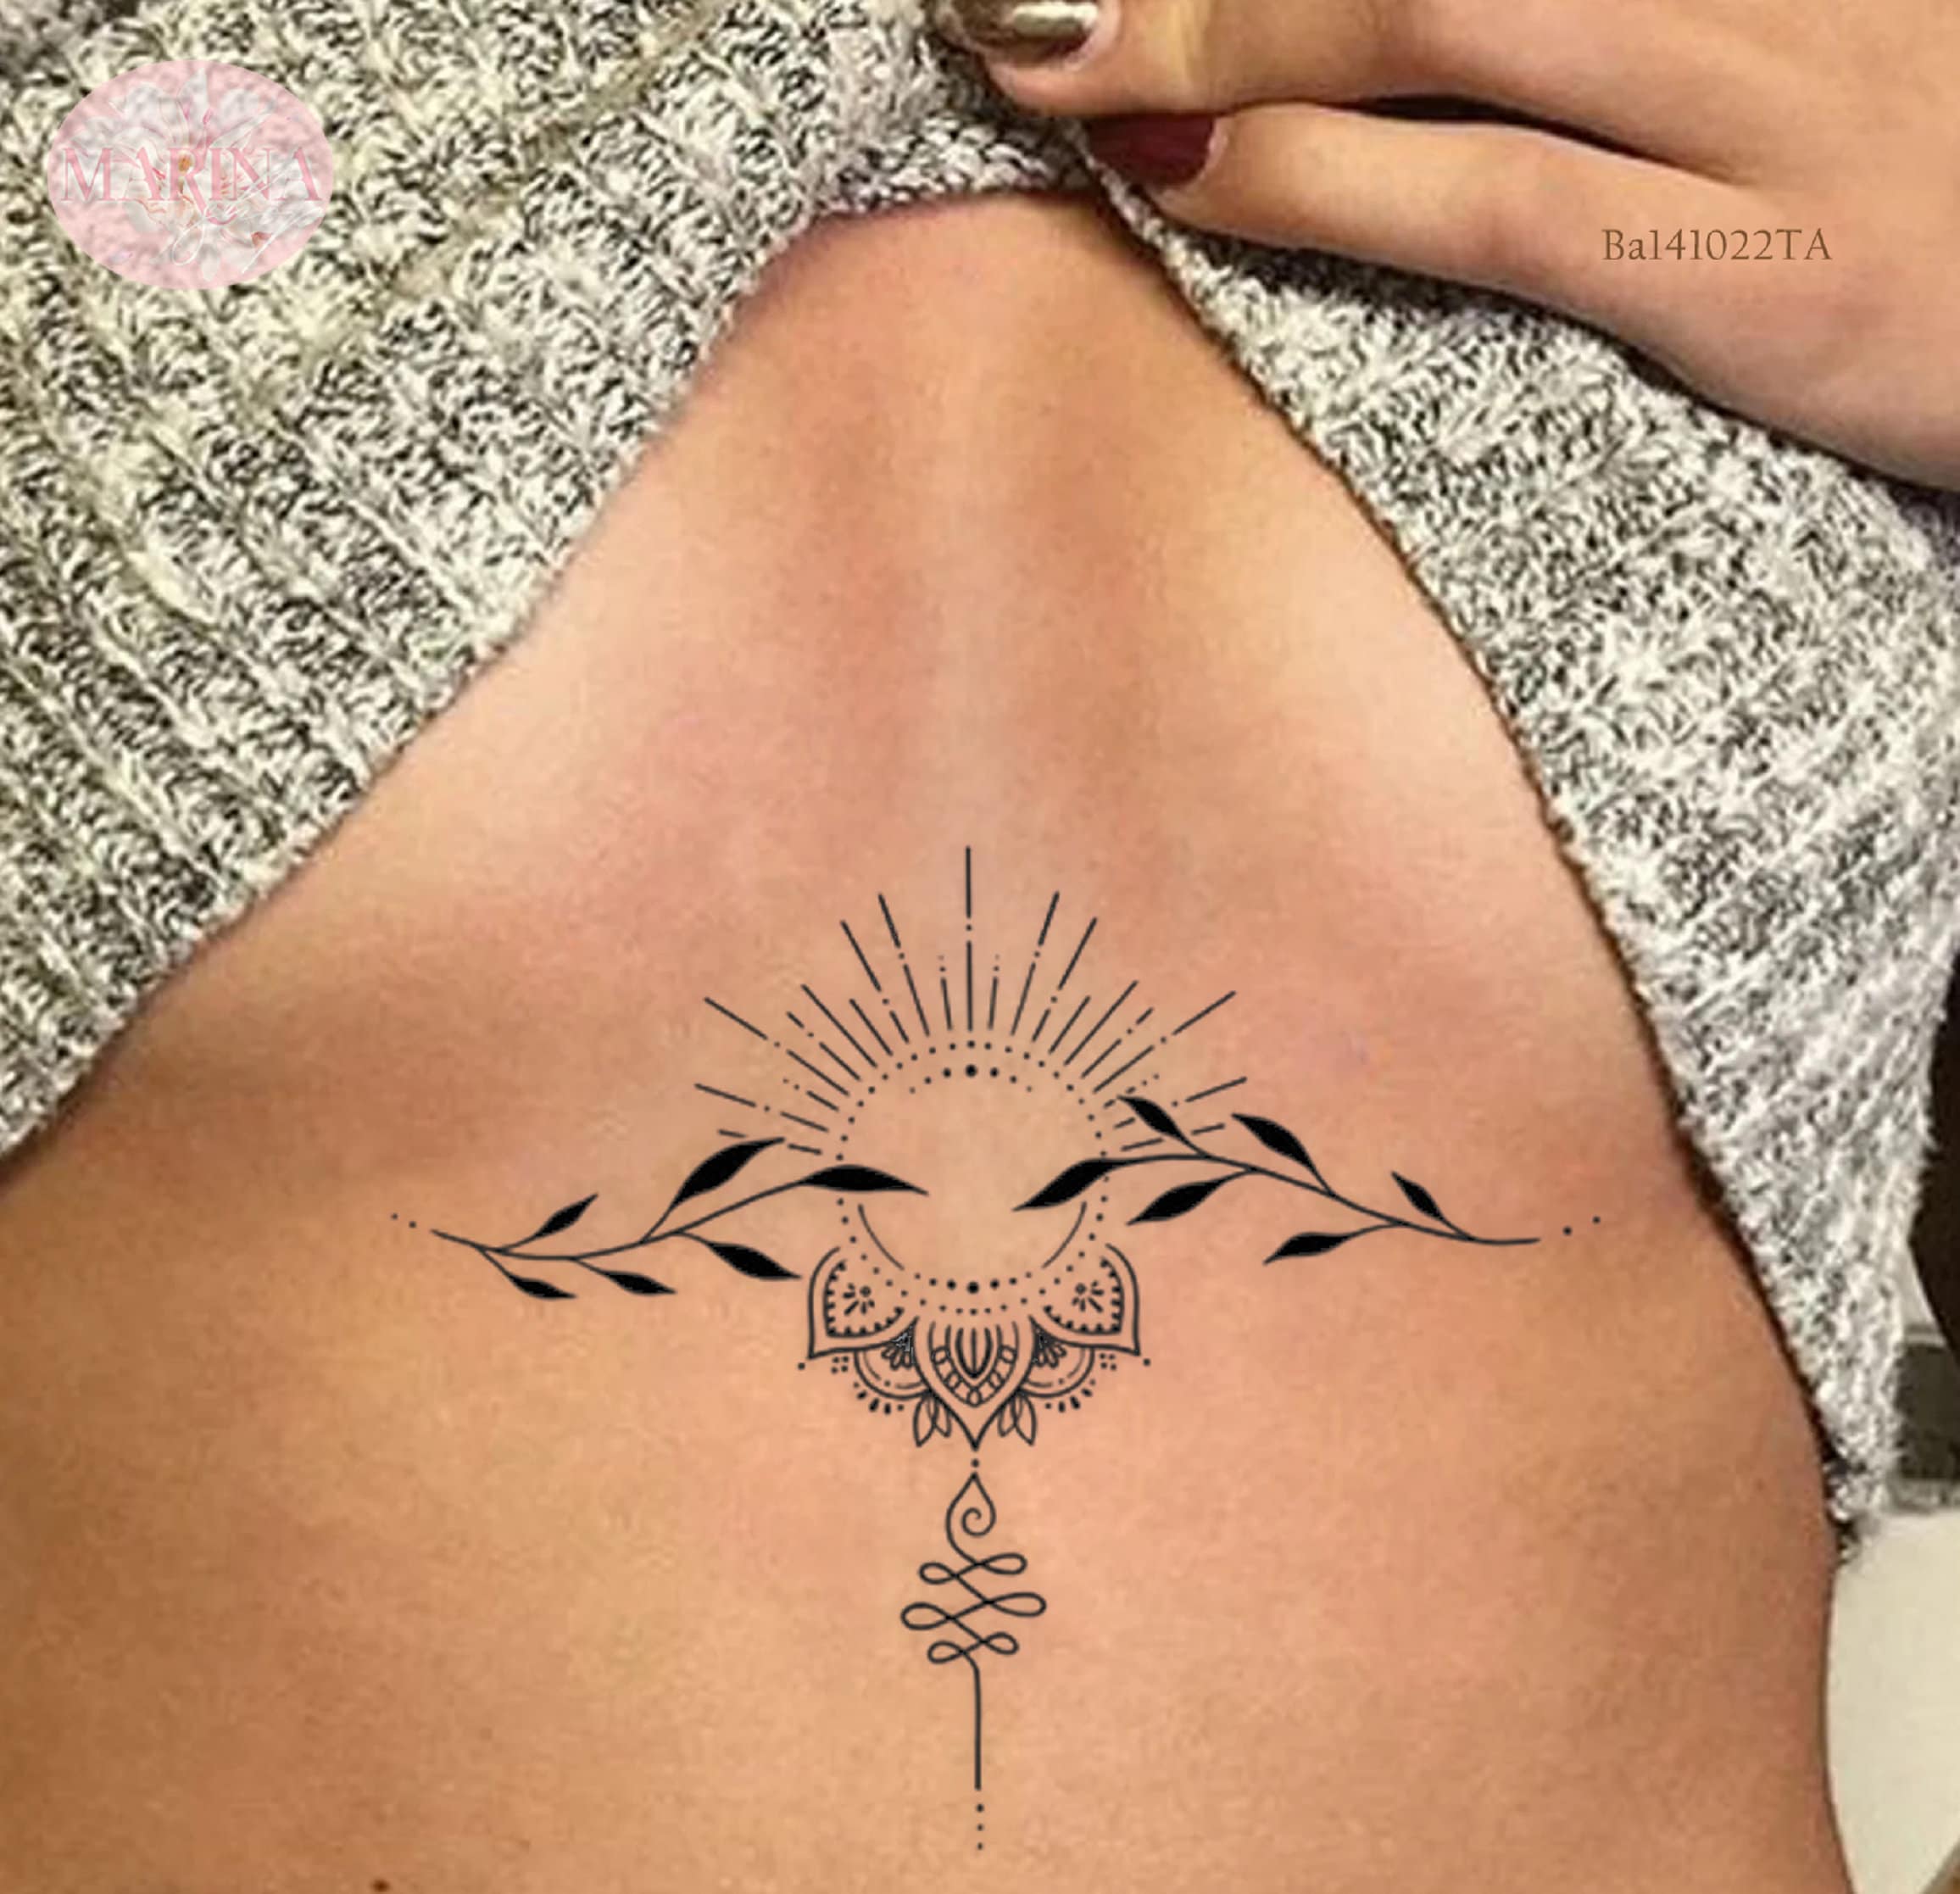 Top 103 Best Stomach Tattoos Ideas  2021 Inspiration Guide  Belly  tattoos Stomach tattoos Chest piece tattoos